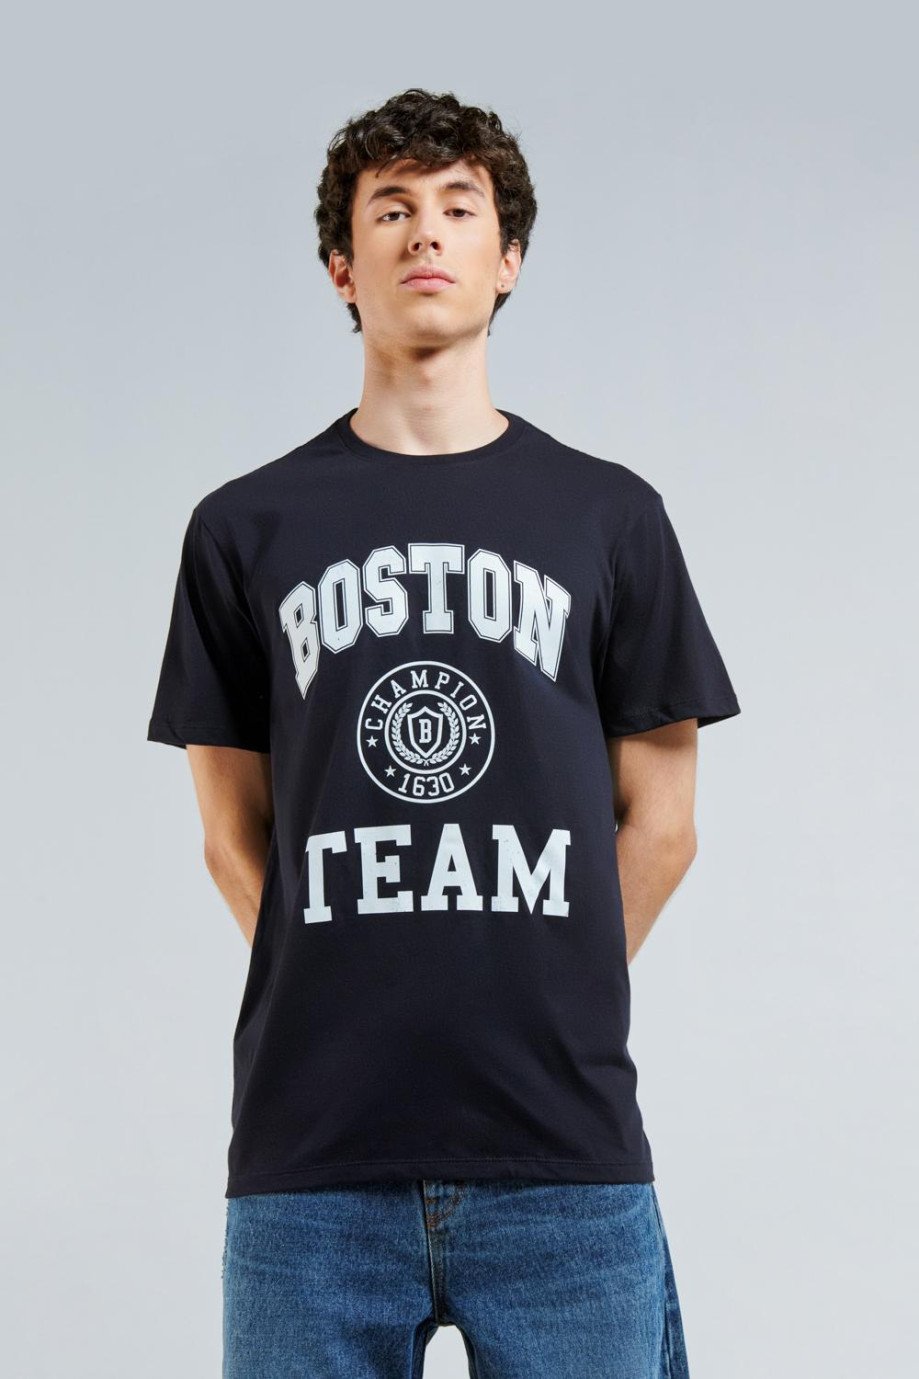 Camiseta unicolor con diseño college de Boston y manga corta